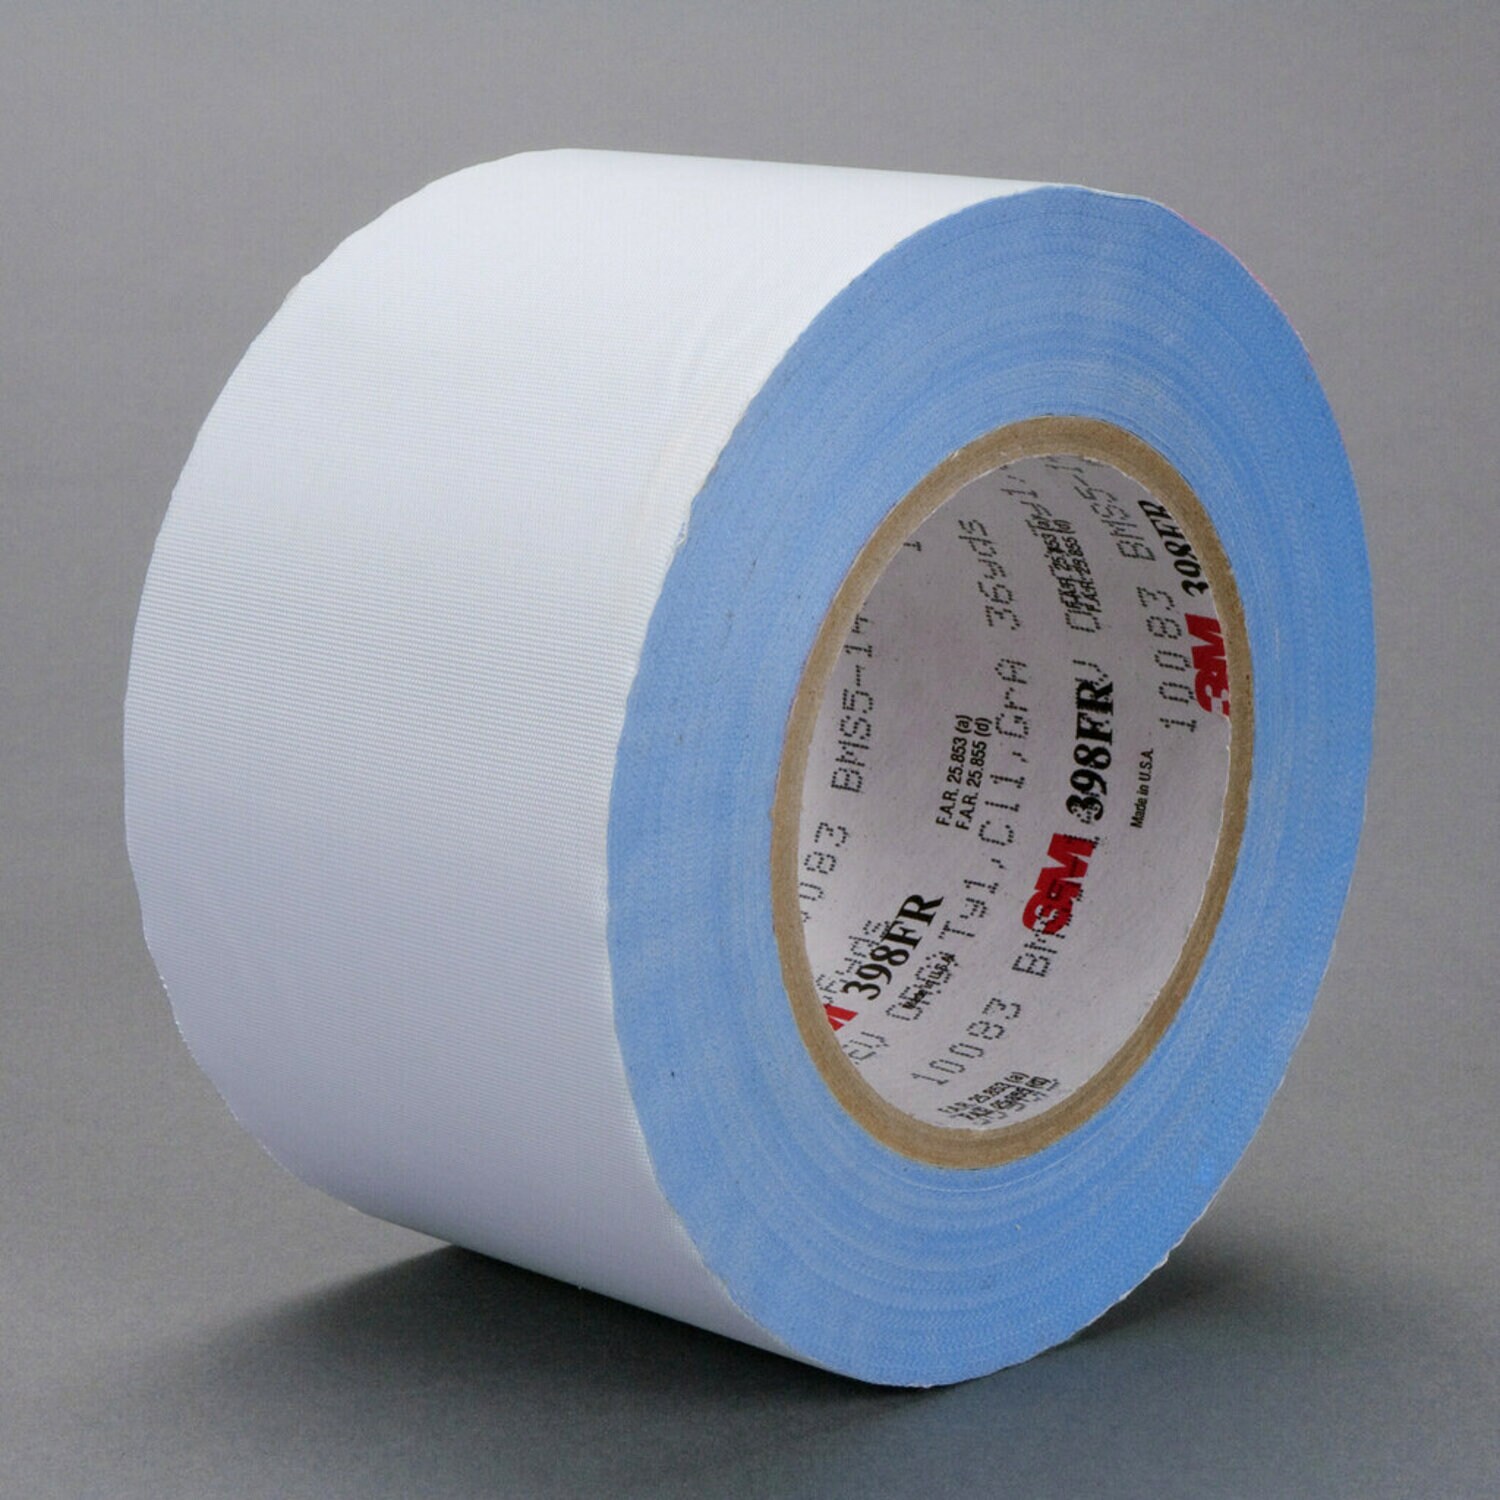 7010374255 - 3M Glass Cloth Tape 398FR, White, 3 in x 36 yd, 7 mil, 12 rolls per
case, Skip Slit